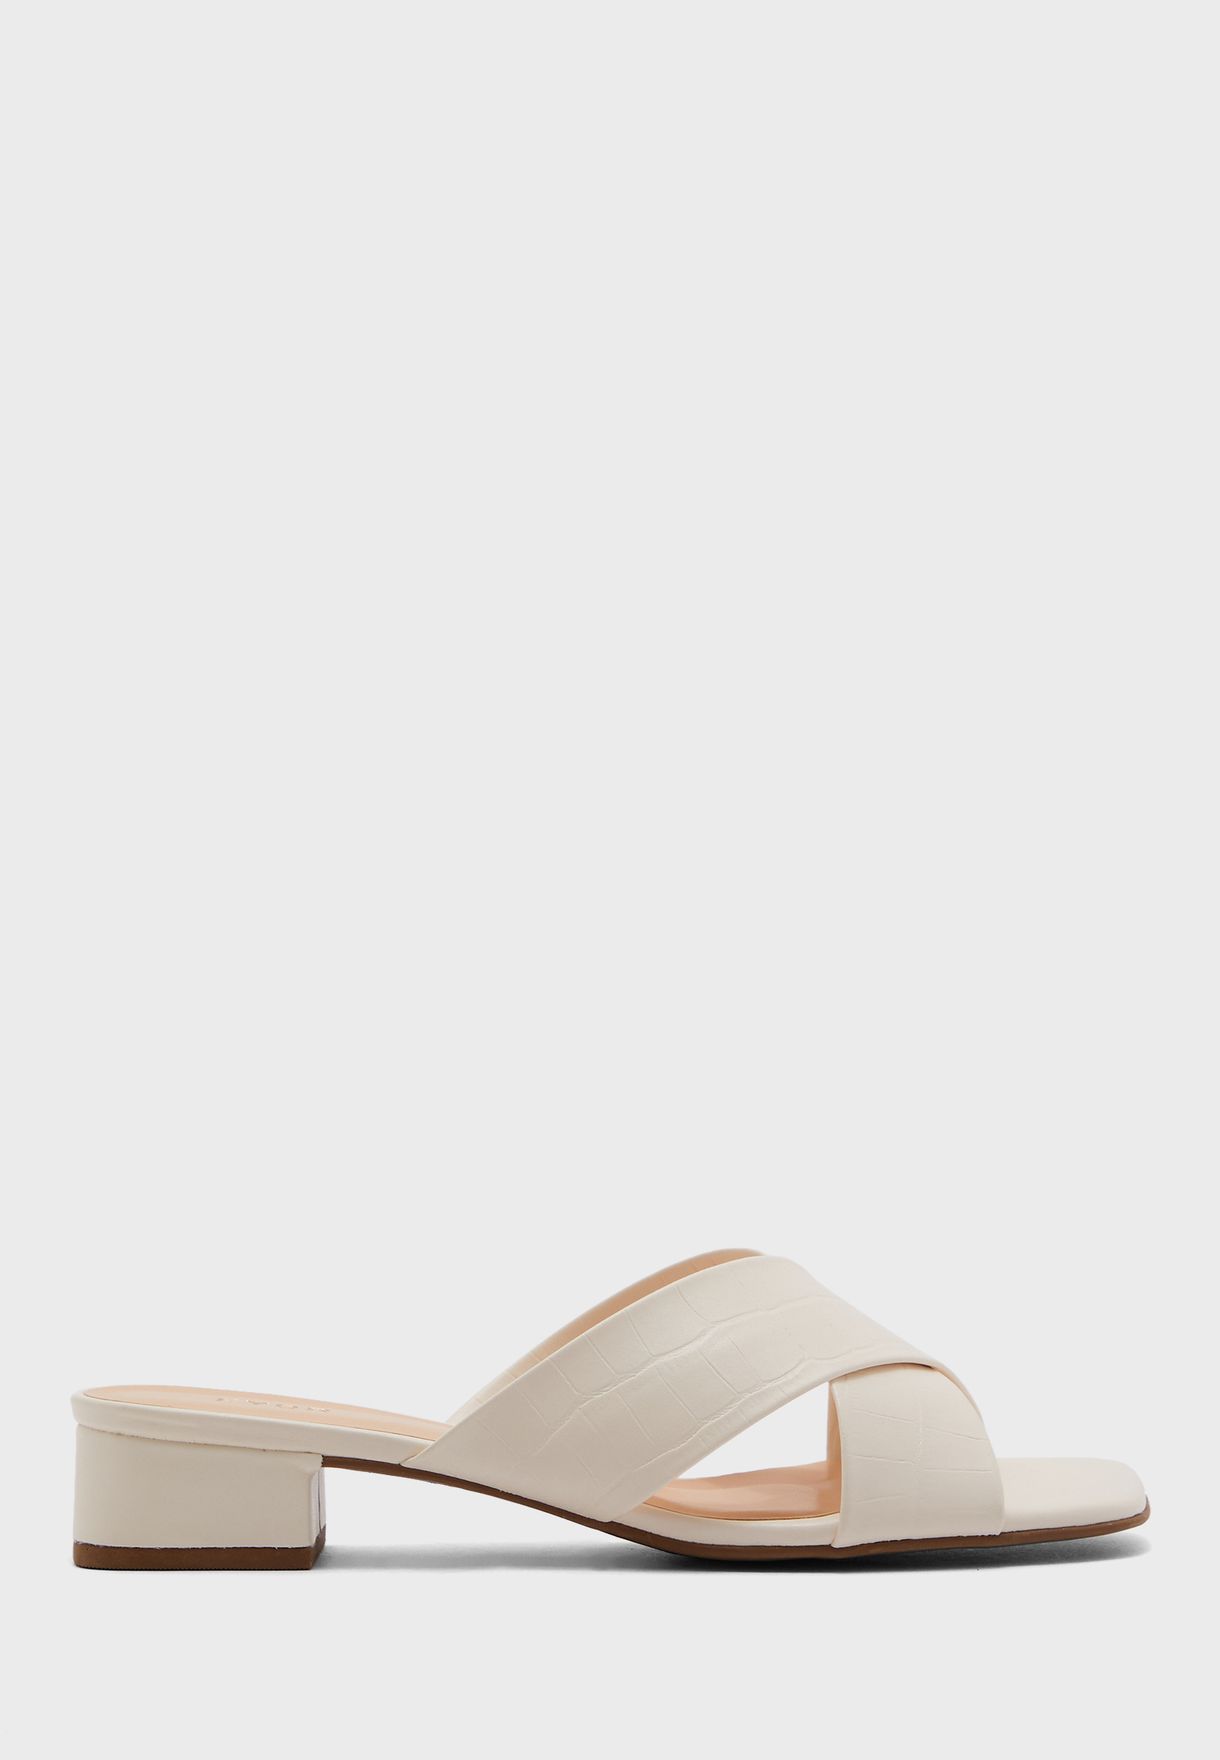 Buy FYOR white Casual Low Heel Sandals for Women in Dubai, Abu Dhabi